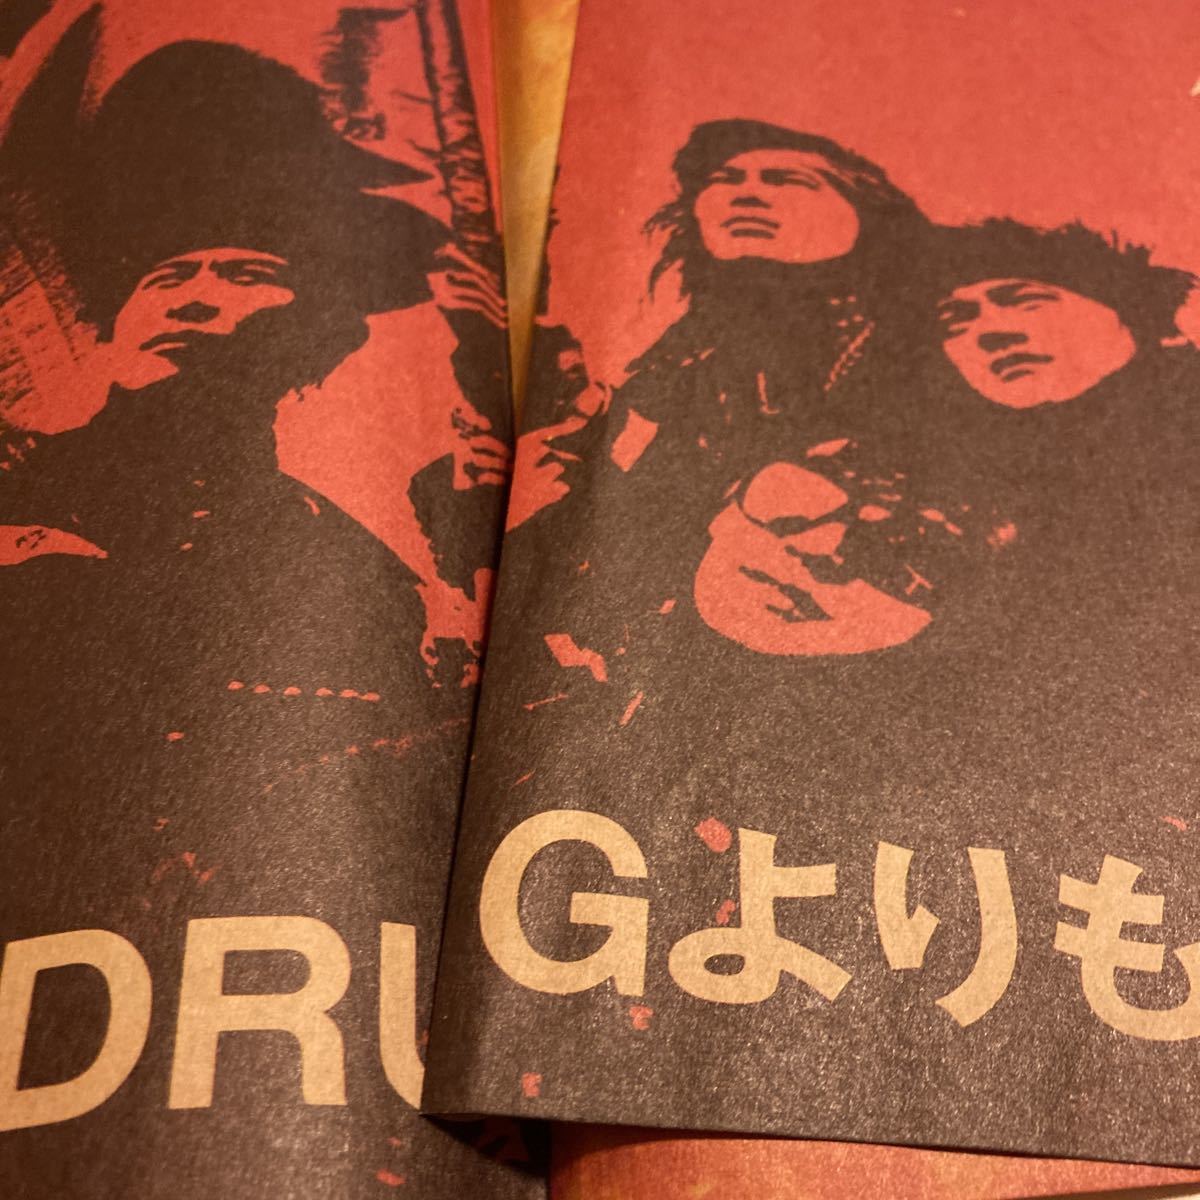 RED WARRIORS SEX DRUG ROCK ‘N’ROLL 1st ALBUM “LESSON1” デビューパンフレット_画像5